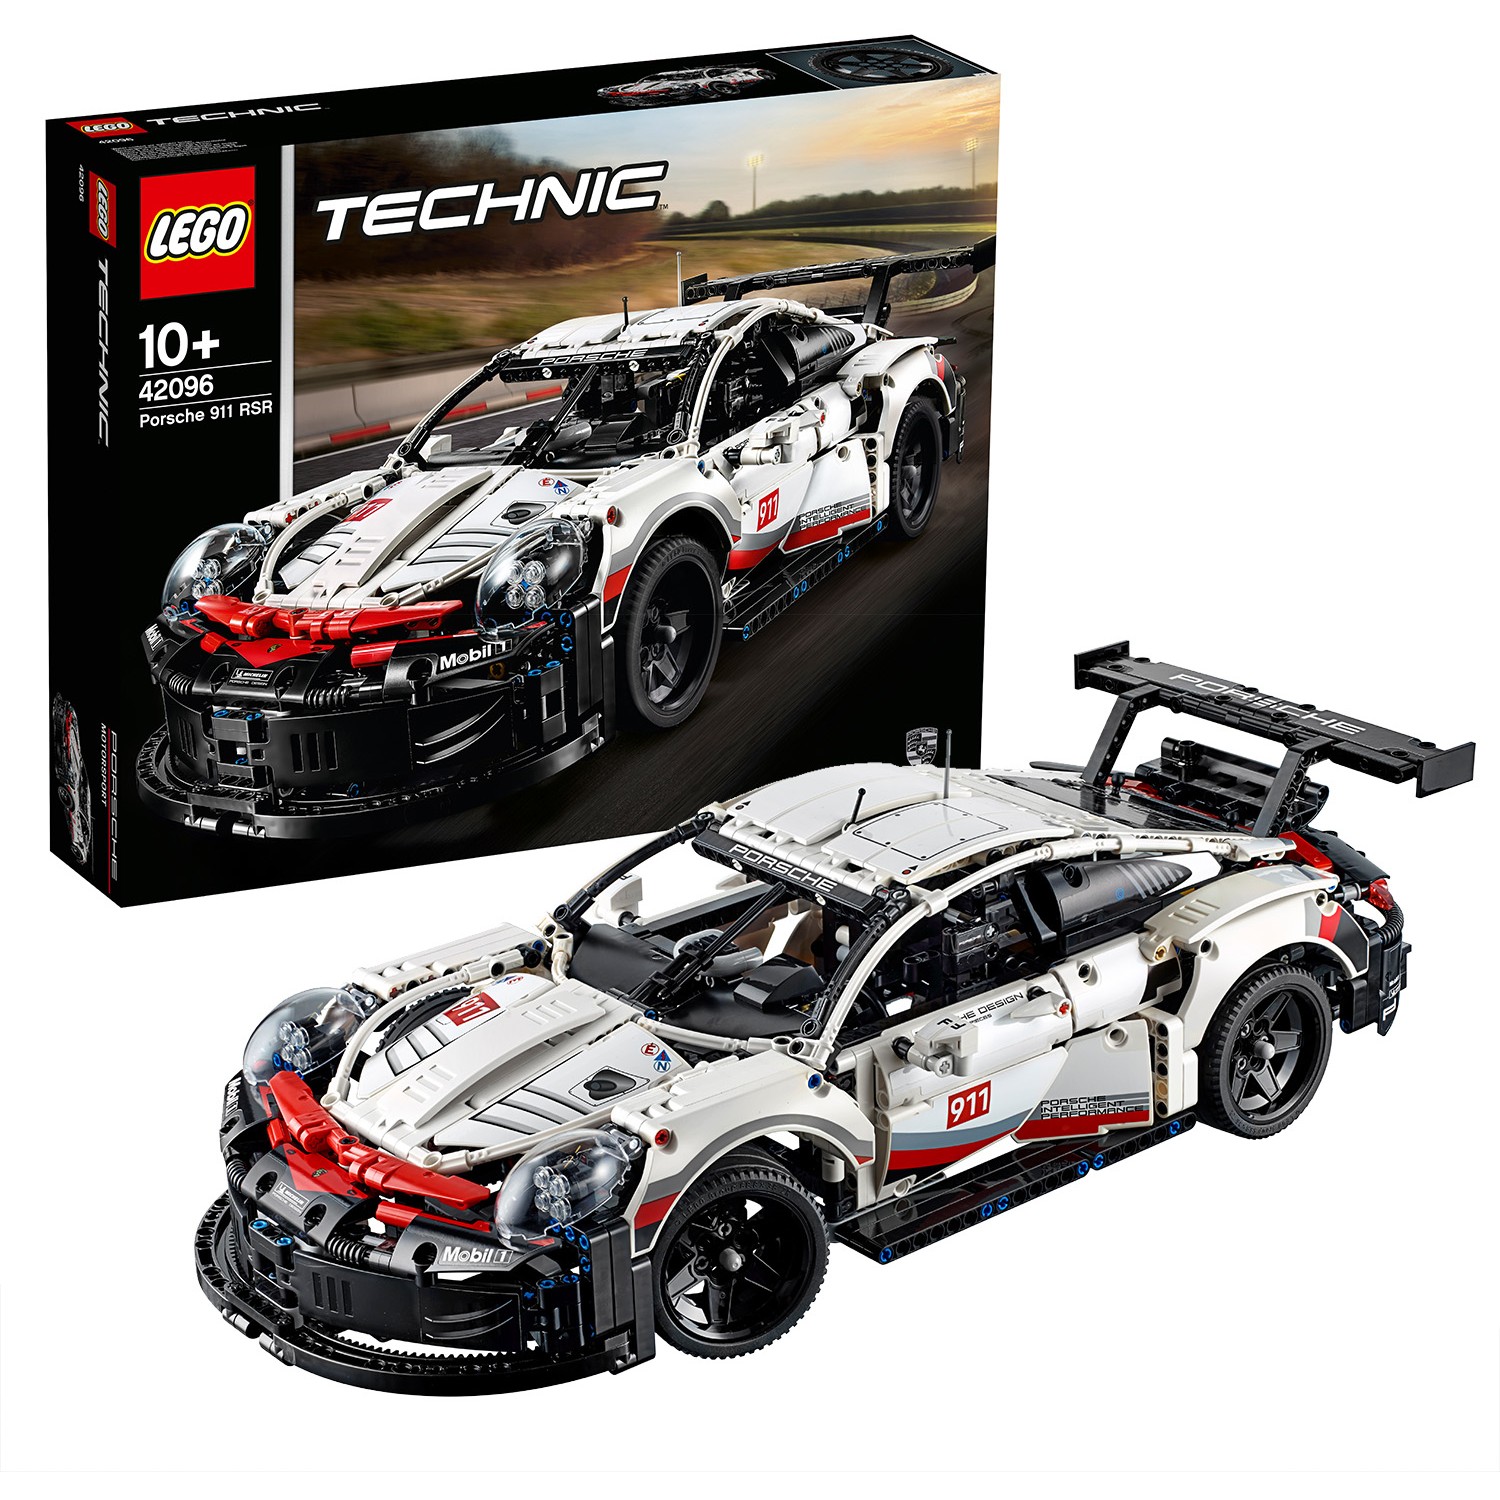 LEGO 42096, Spielzeug, LEGO Technic Porsche 911 RSR 42096 (BILD2)